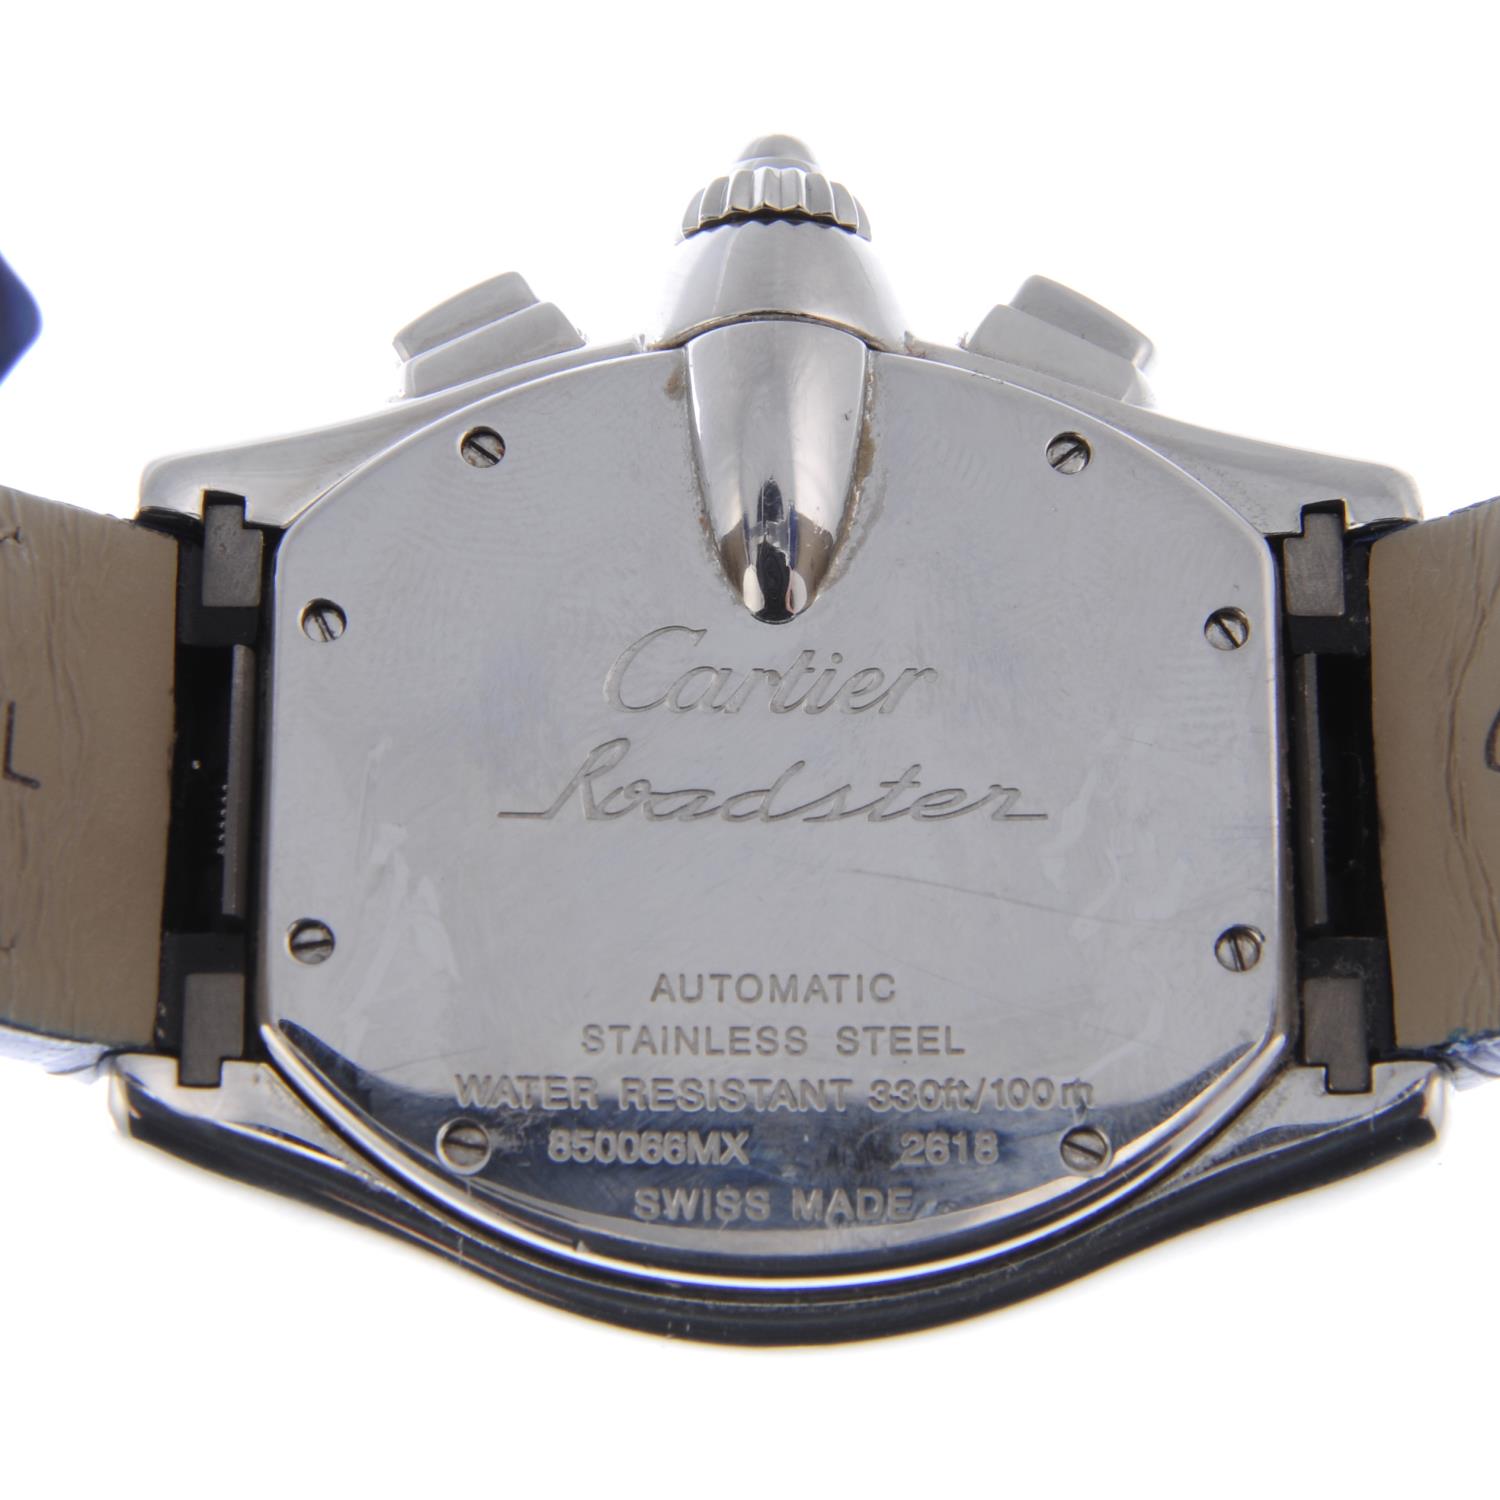 CARTIER - a gentleman's Roadster chronograph wrist watch. - Image 2 of 4